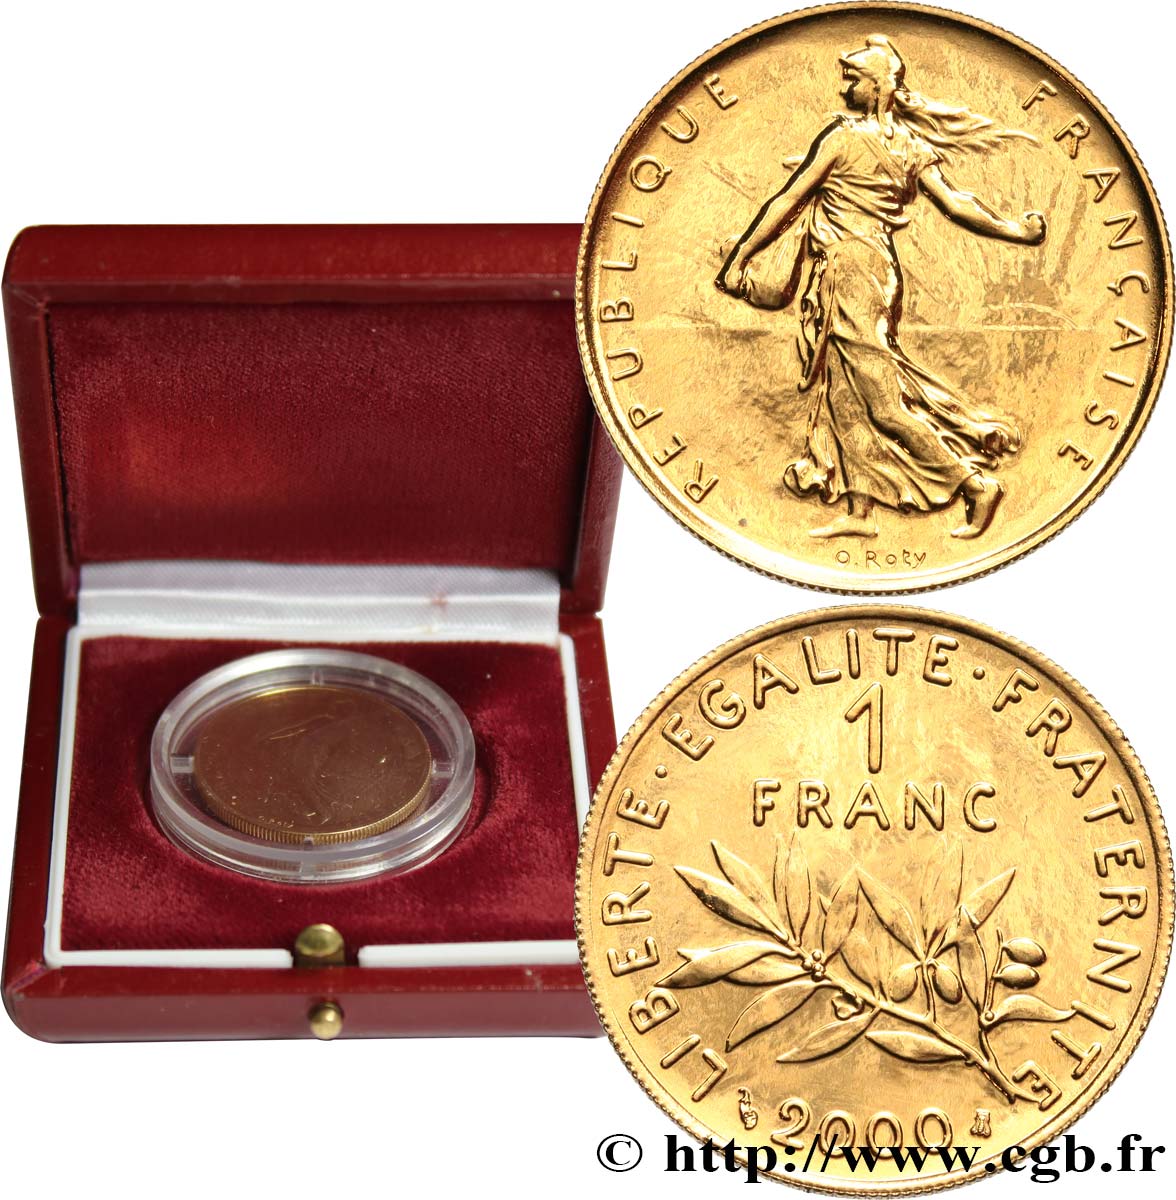 1 franc Semeuse Or, BU (Brillant Universel) 2000 Pessac F5.1007 1 MS 